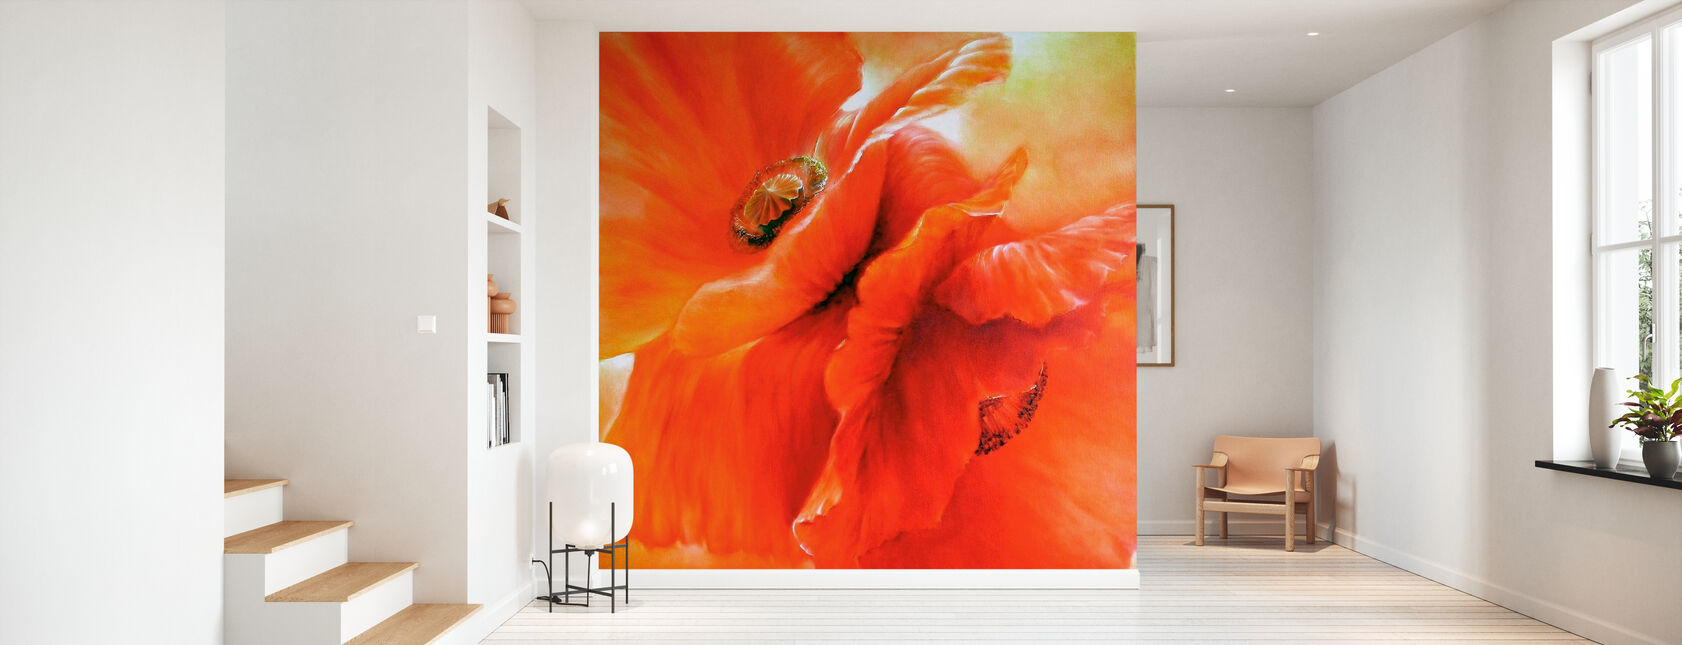 Red Poppy - Wallpaper - Hallway